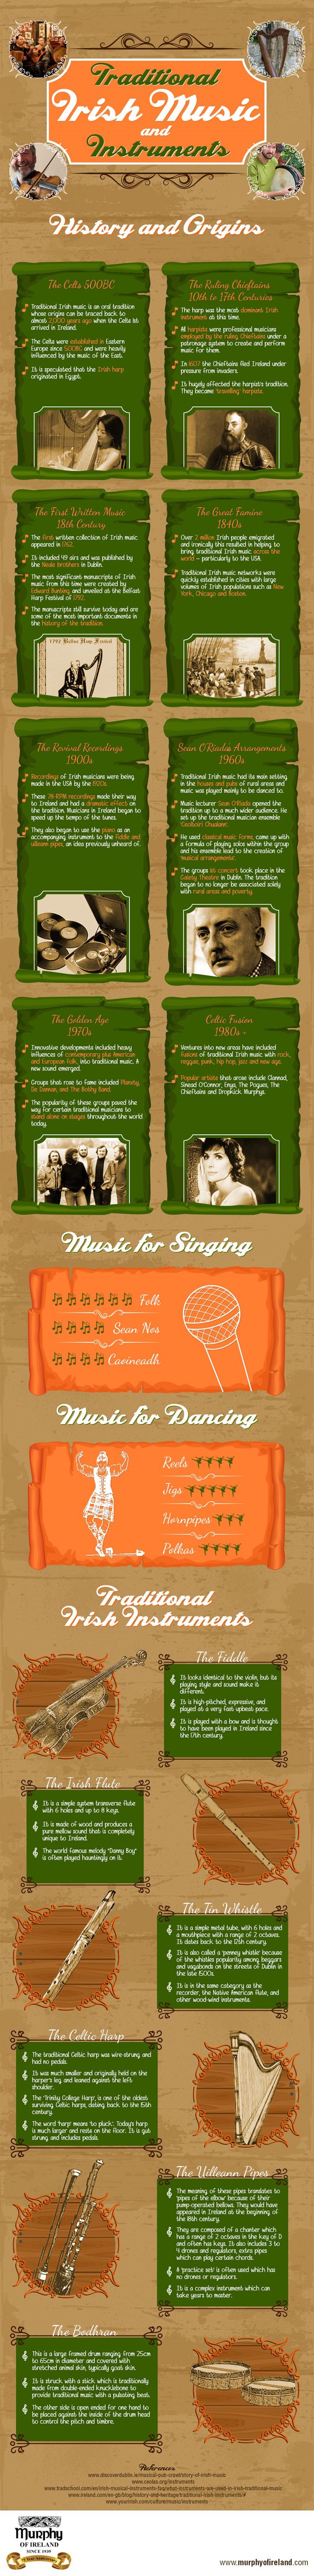 Irish music and instruments infographic from murphyofireland.com